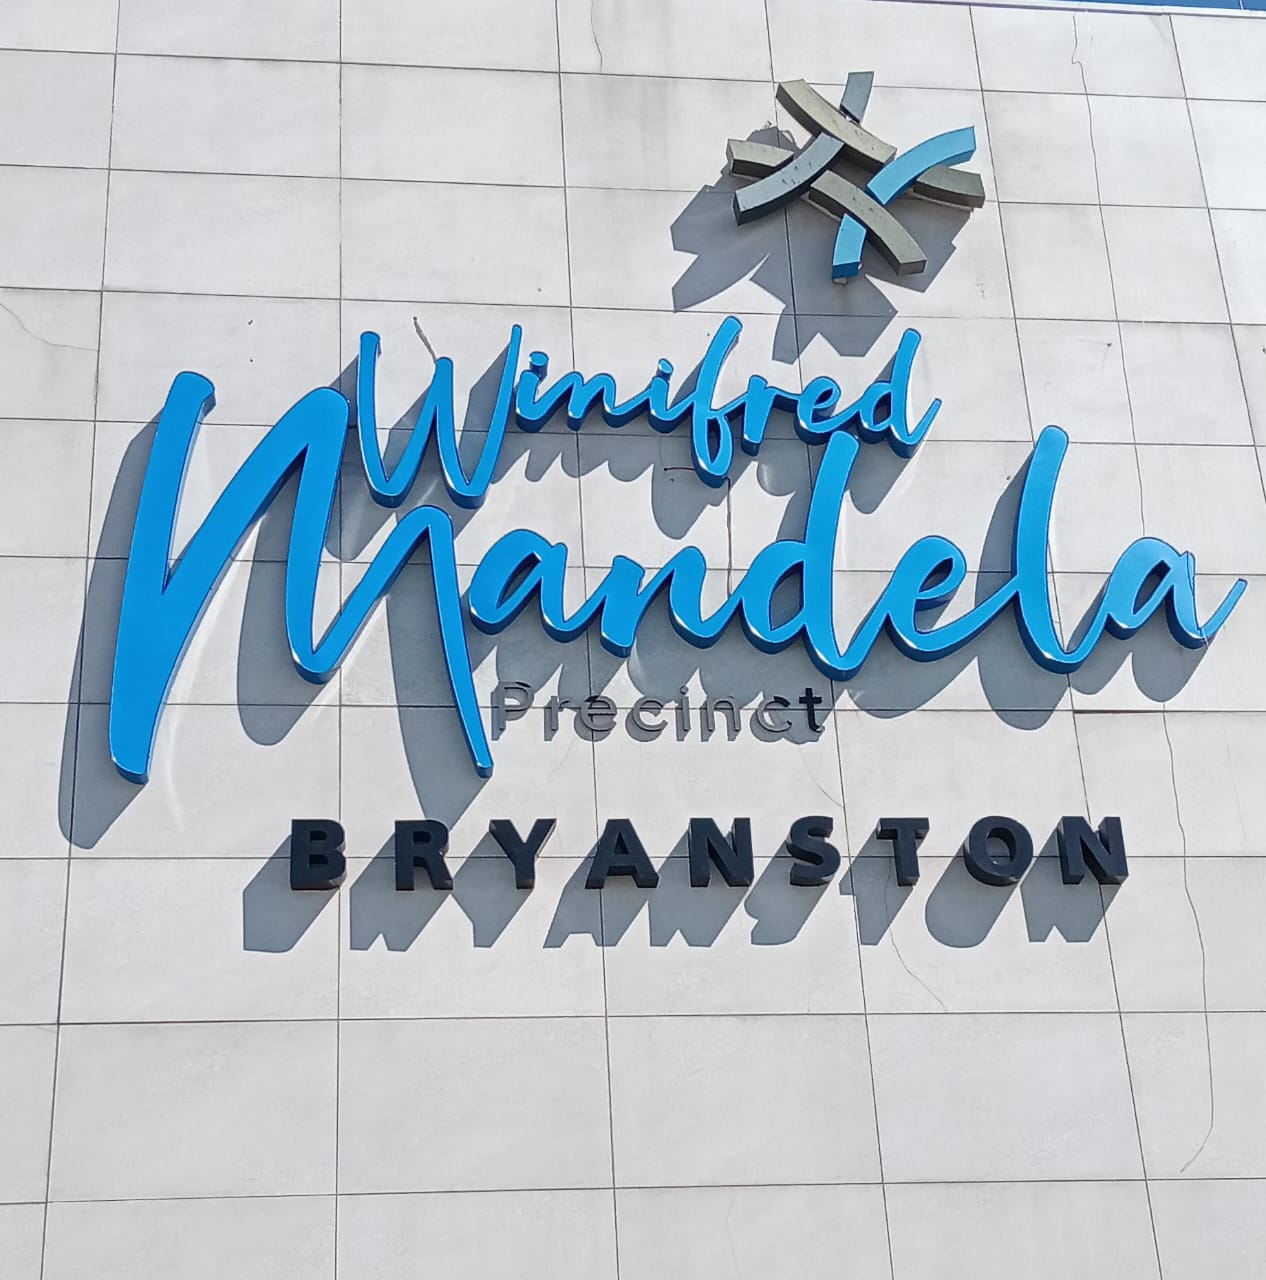 Transformation In Johannesburg: Nicolway Centre Becomes Winifred Mandela Precinct 5